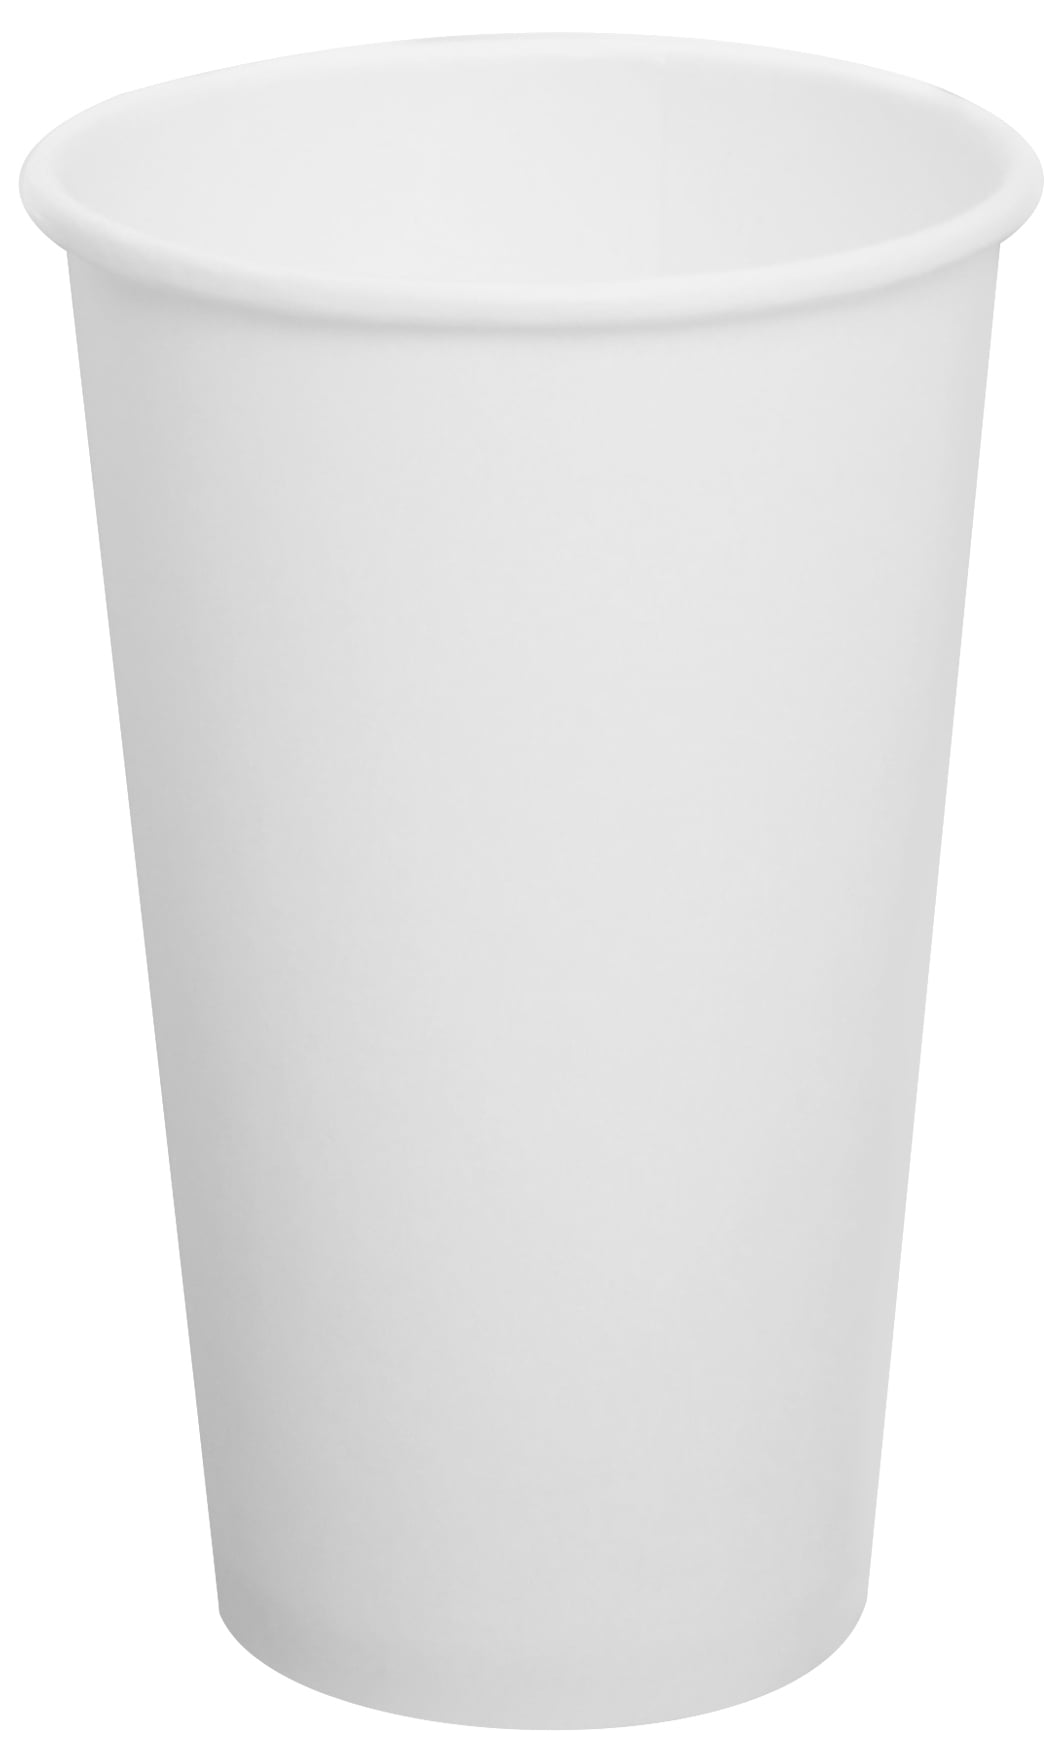 Dart J Cup Insulated Foam Pedestal Cups, 44 oz, White, 300/Carton - Mfr  Part# 44AJ32